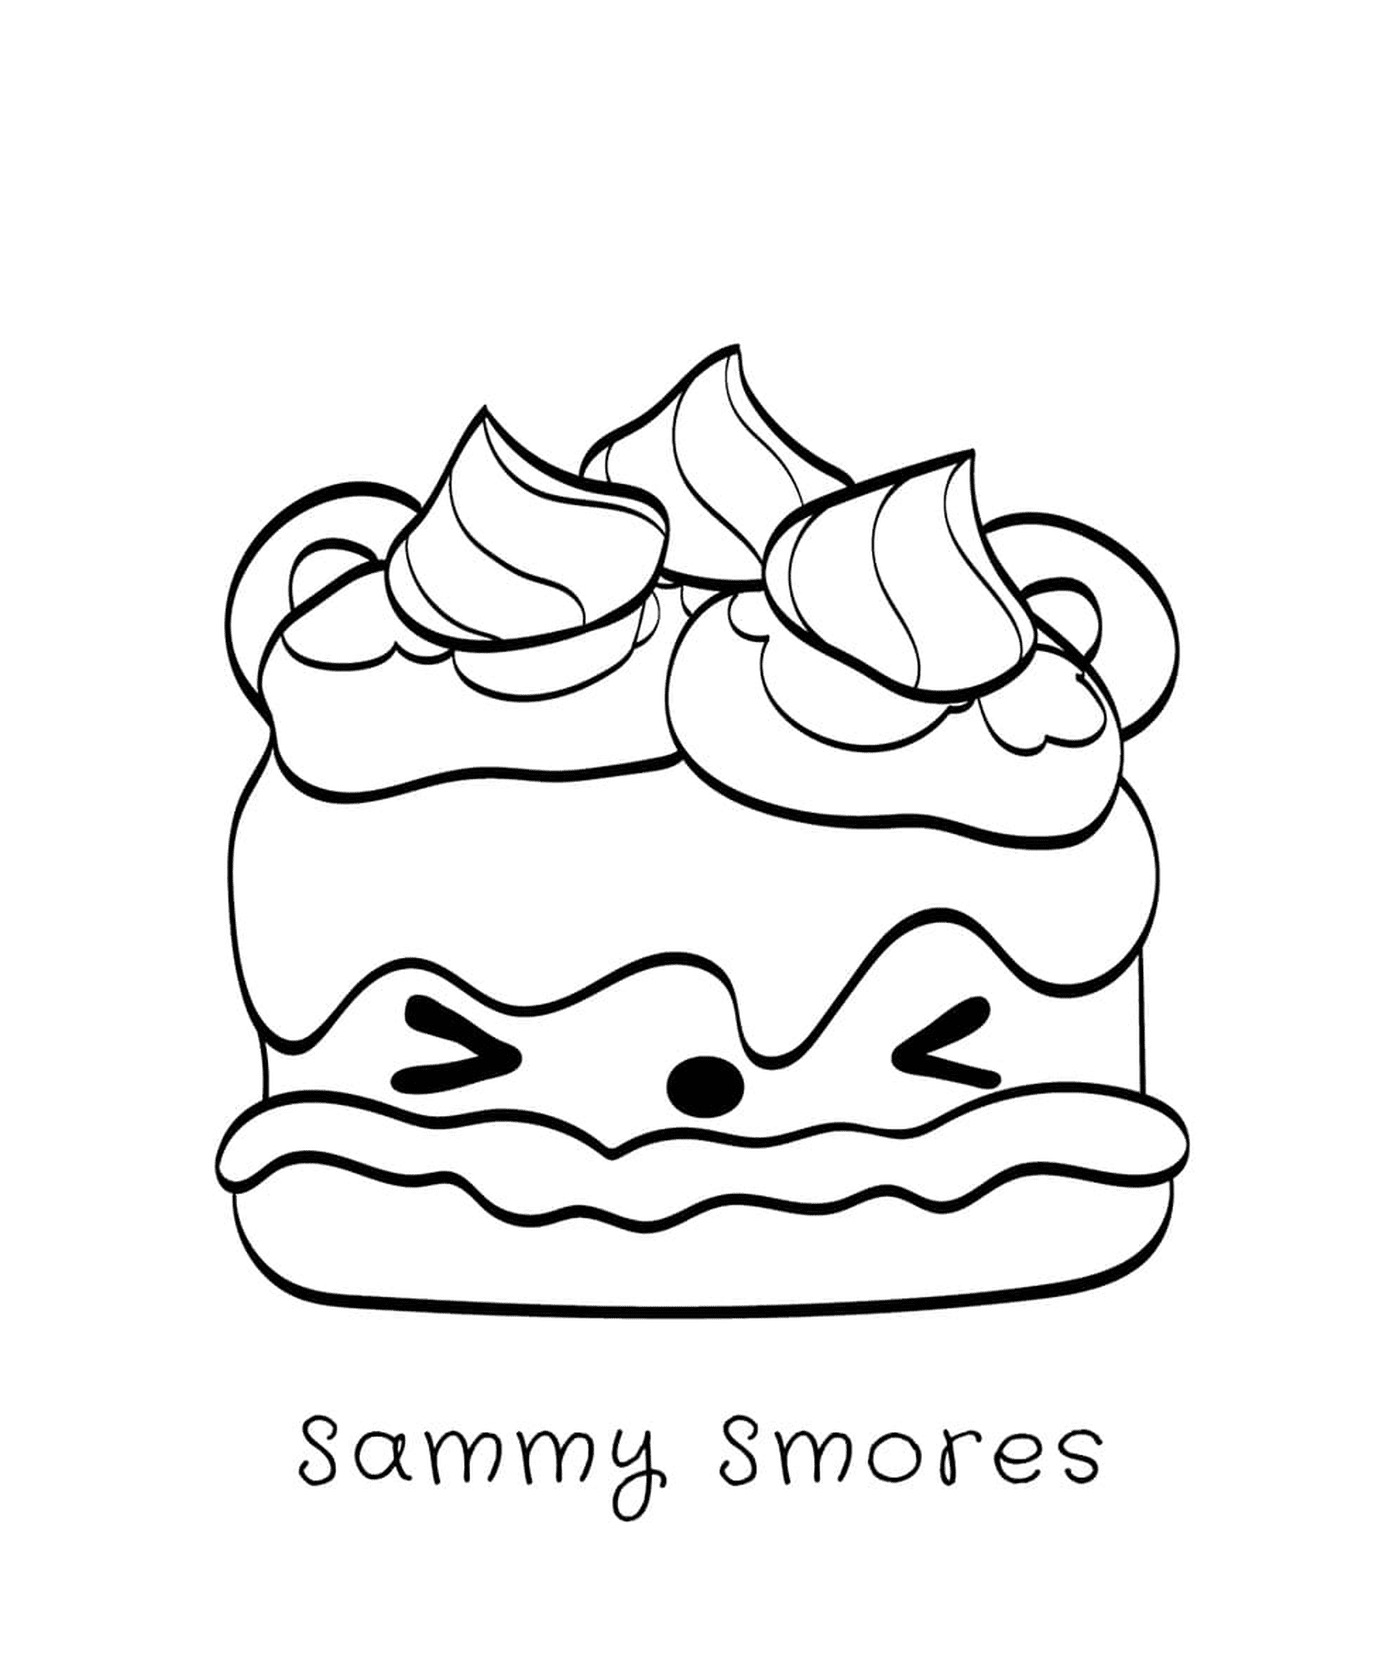  Sammy S'mores, un gourmand 